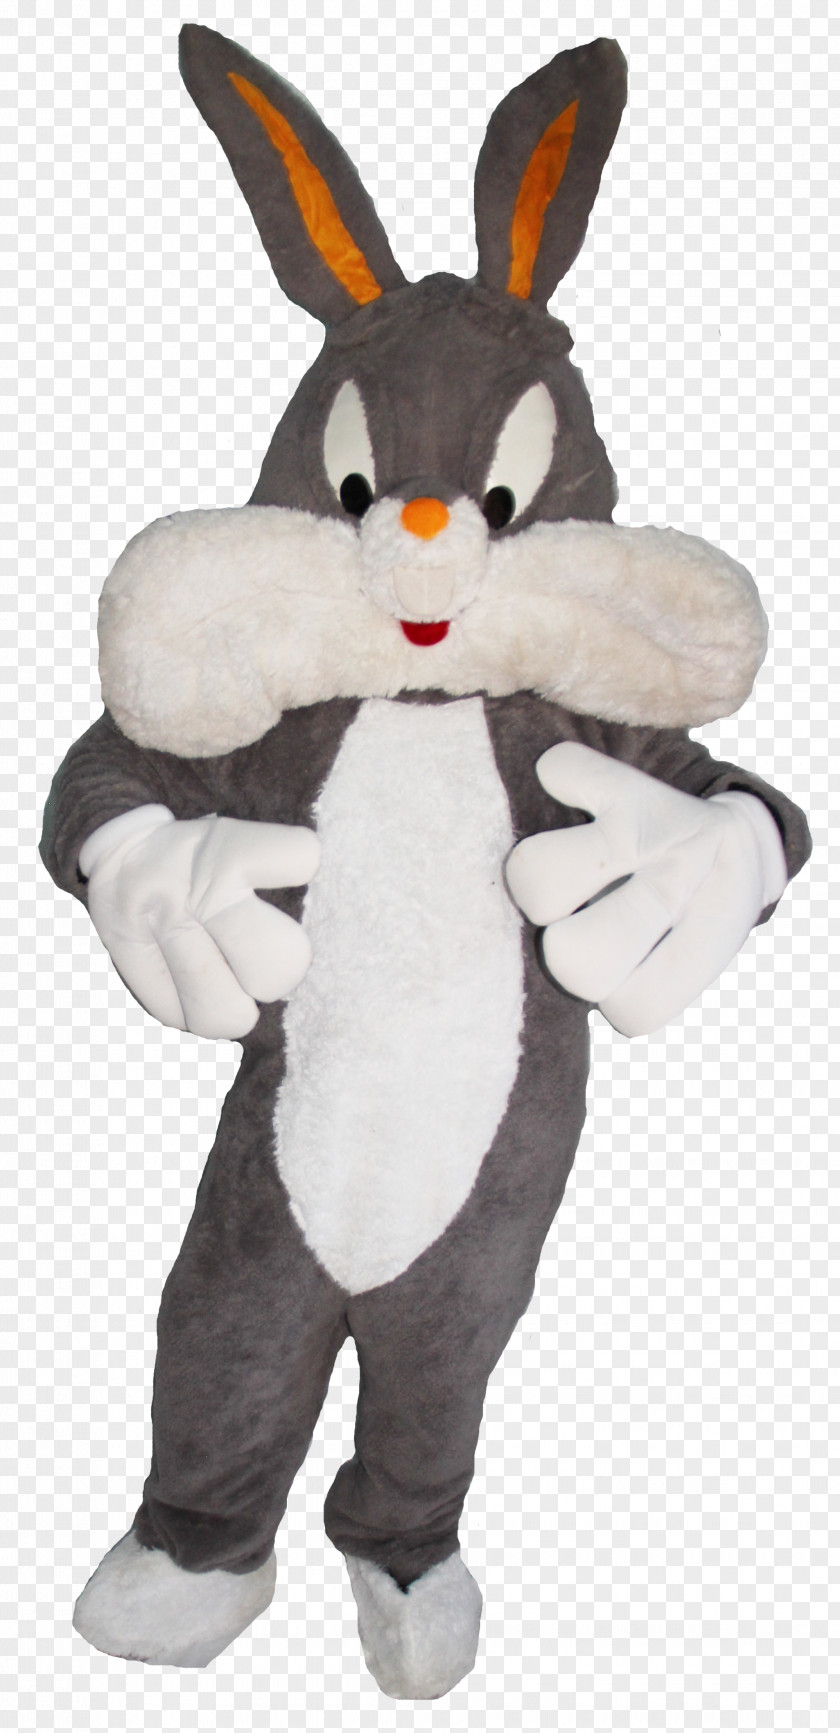 Rabbit Domestic Easter Bunny Mascot Costumed Character PNG